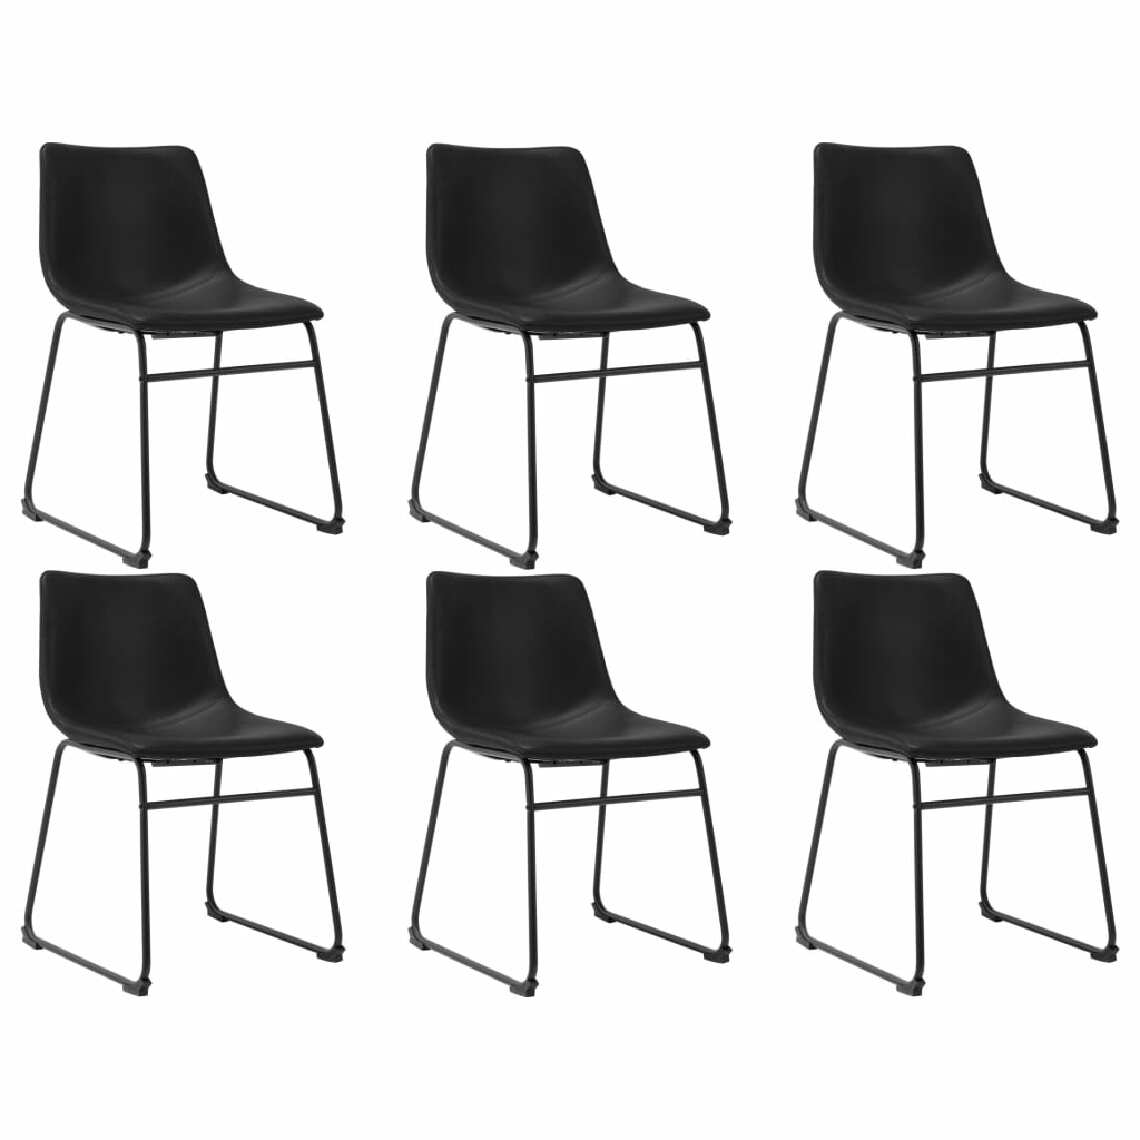 Chunhelife - Chunhelife Chaises de salle à manger 6 pcs Noir Similicuir - Chaises